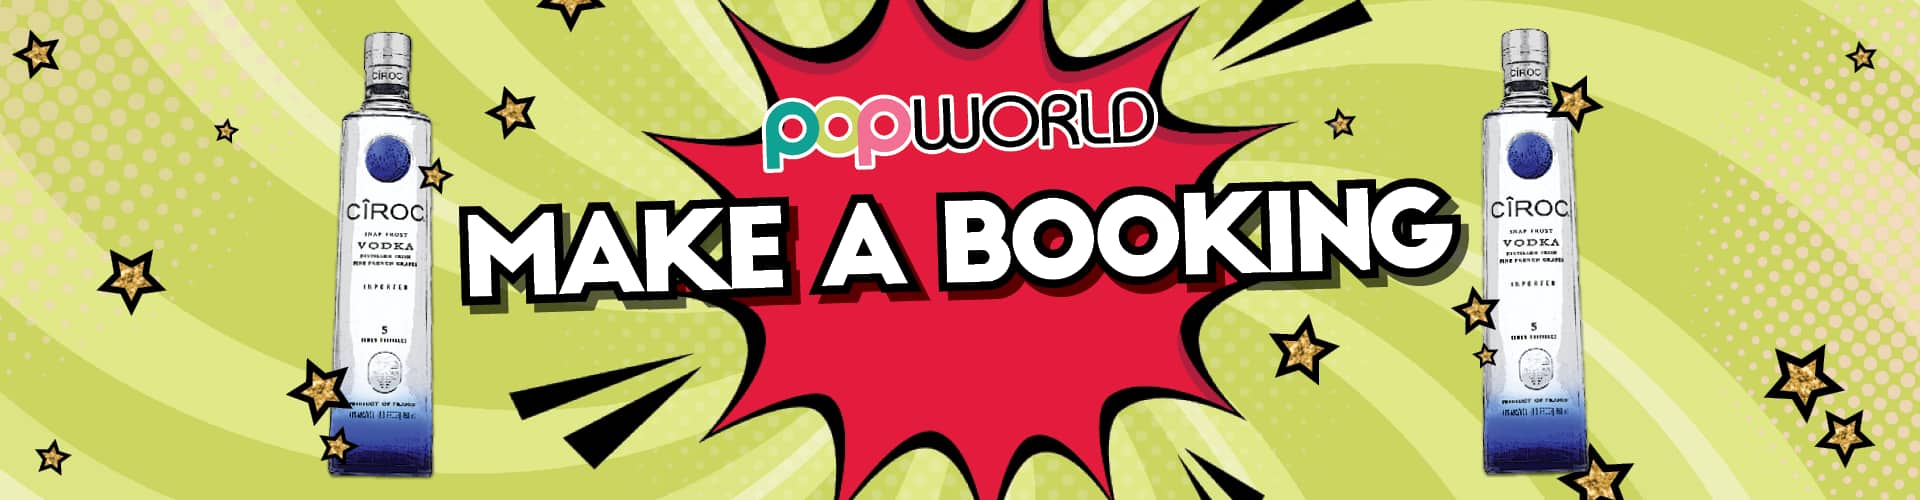 Make a Booking at Popworld Liverpool